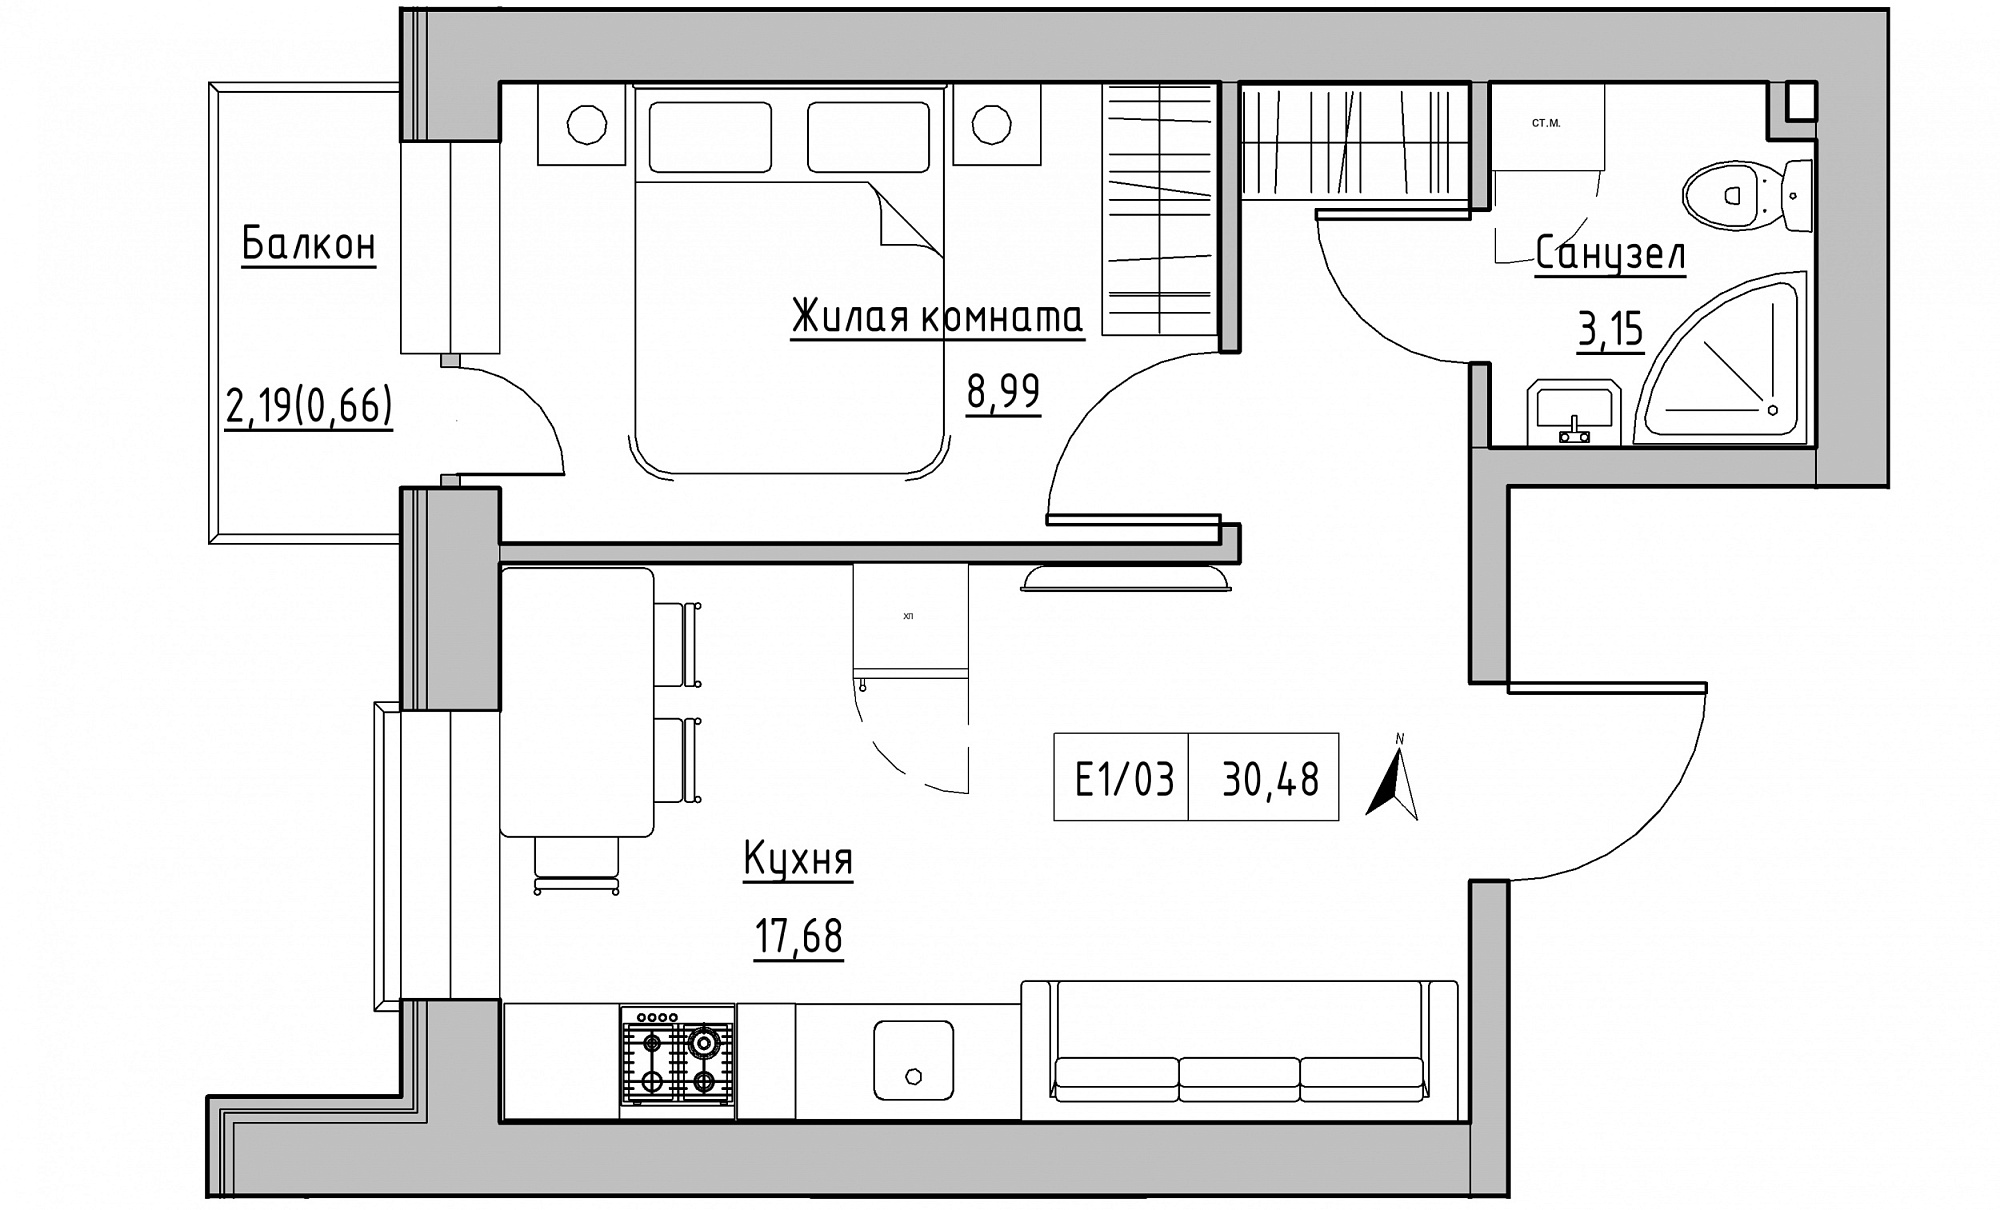 Planning 1-rm flats area 30.48m2, KS-015-05/0003.